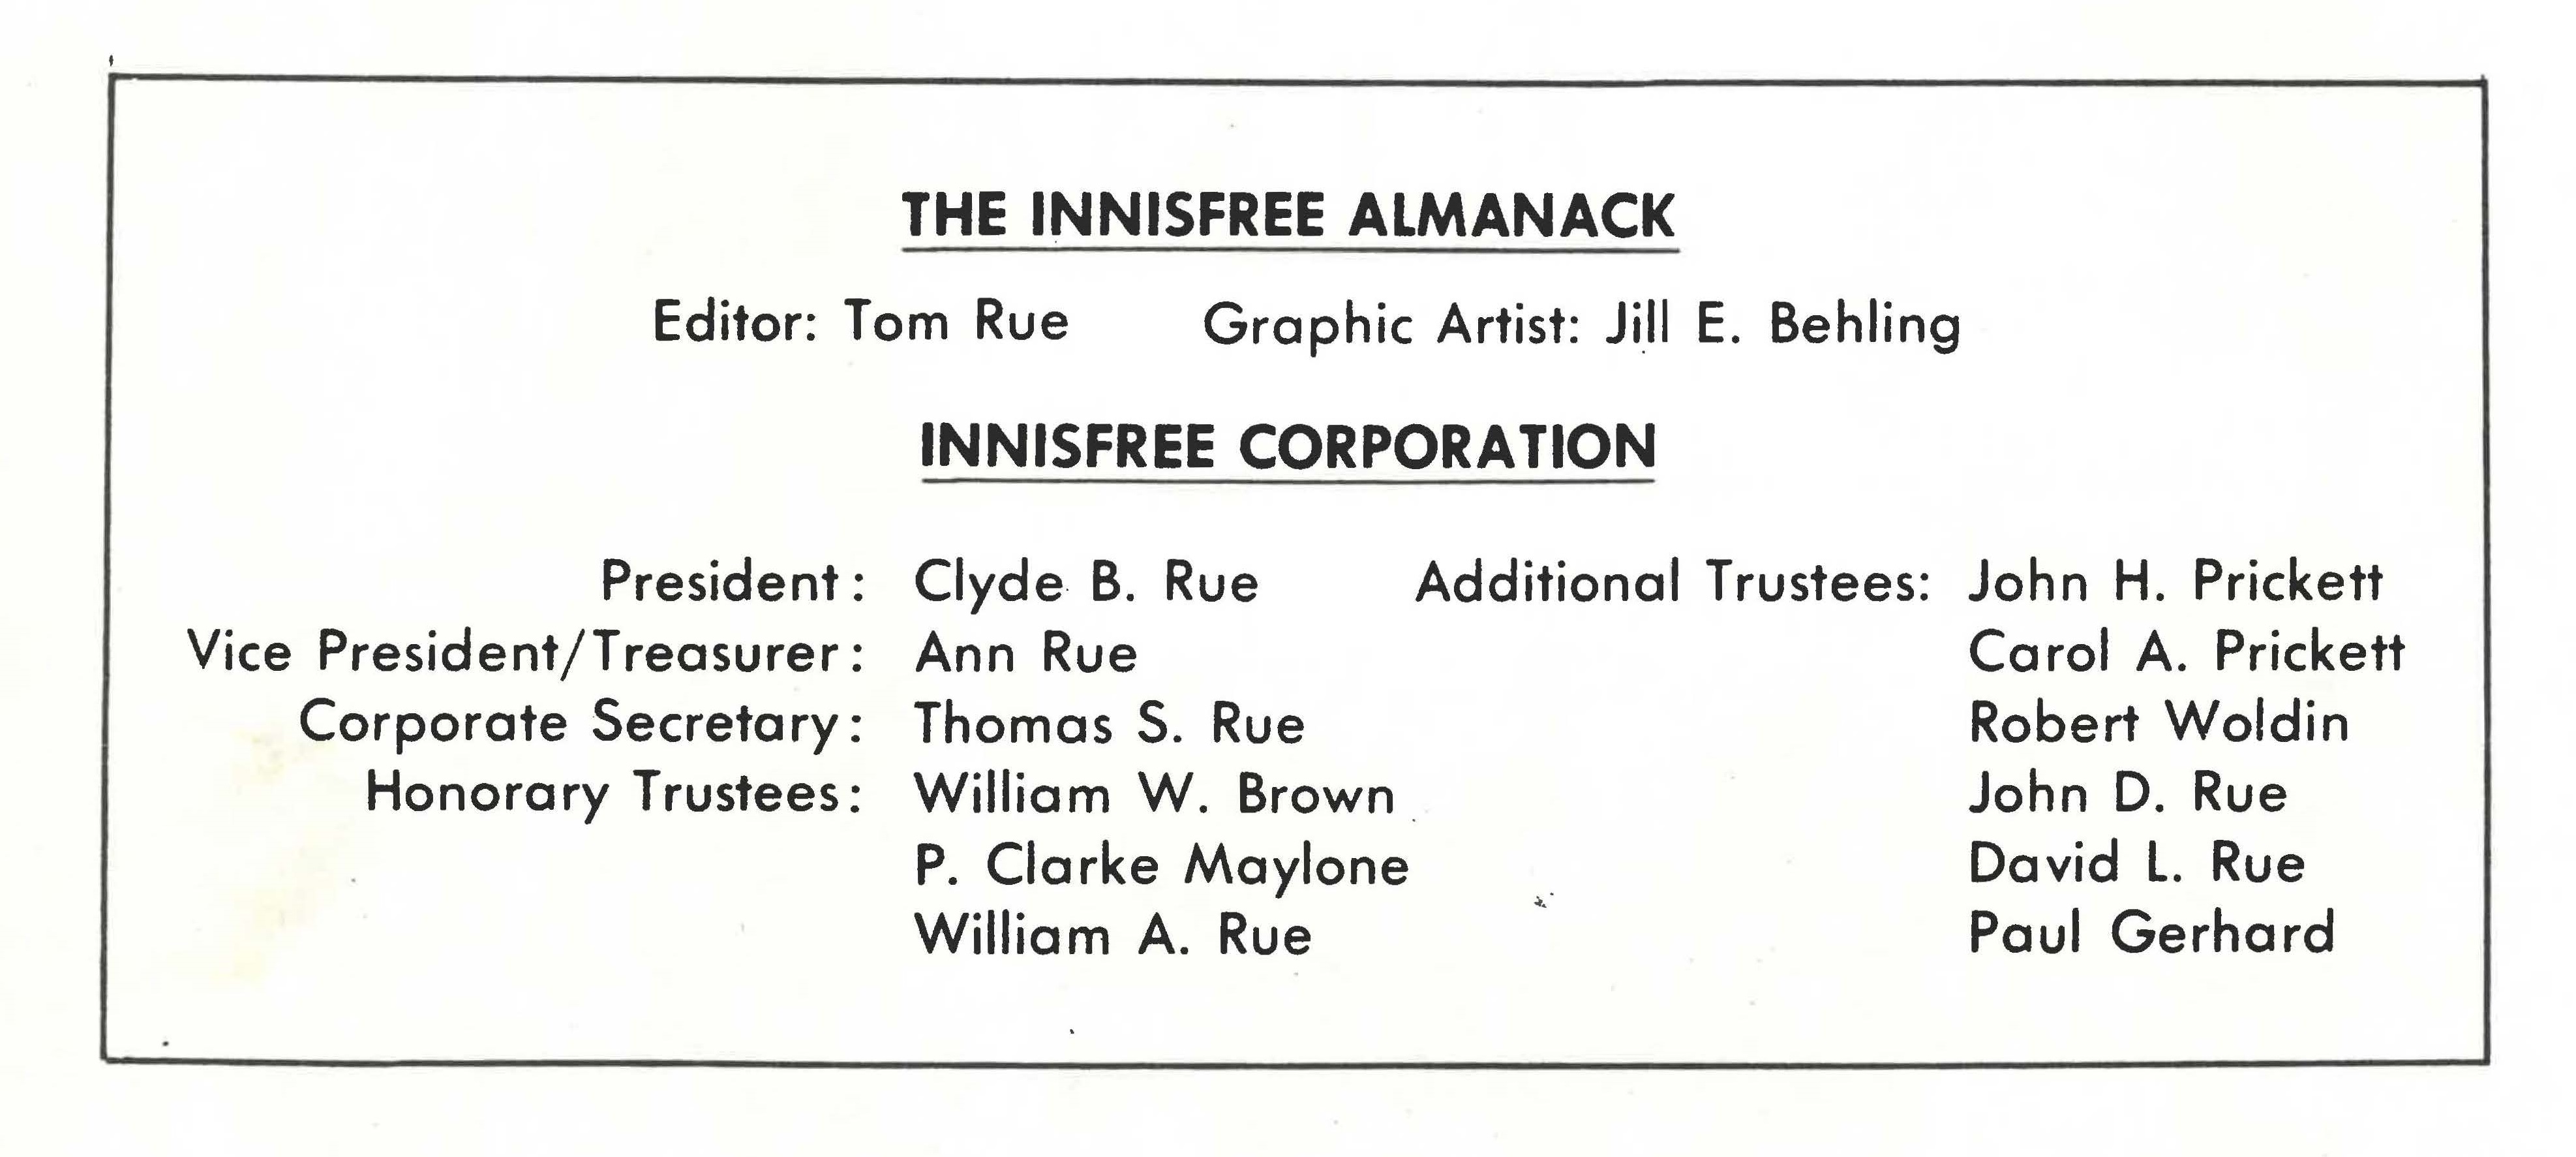 The Innisfree Almanack, masthead box. Tom Rue, editor. Jill E. Padua, graphic artist.